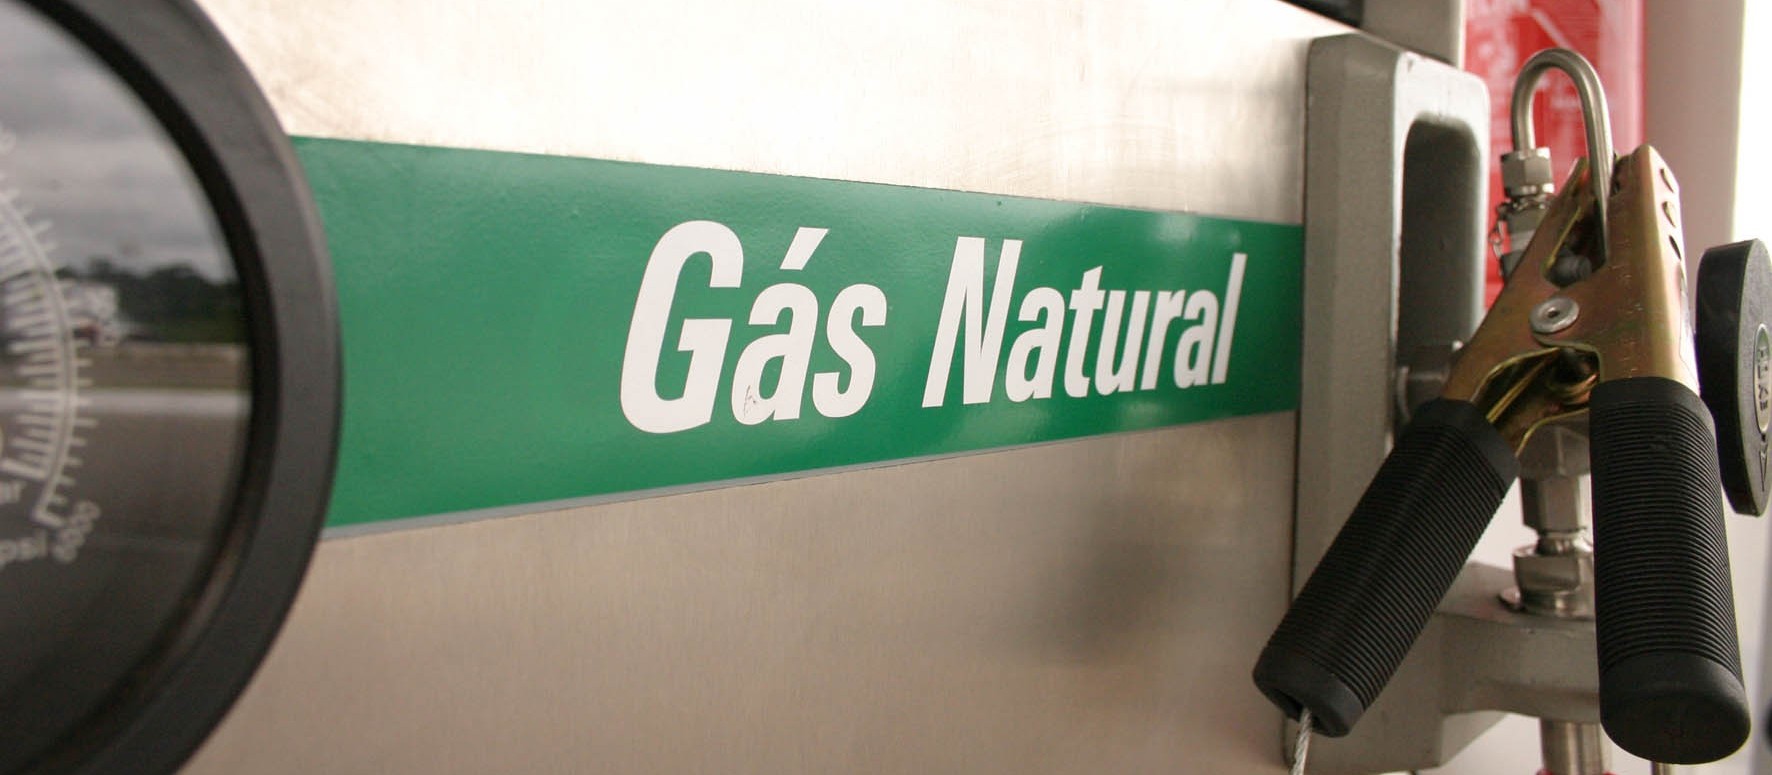 Maringá tem 402 veículos convertidos para gás natural